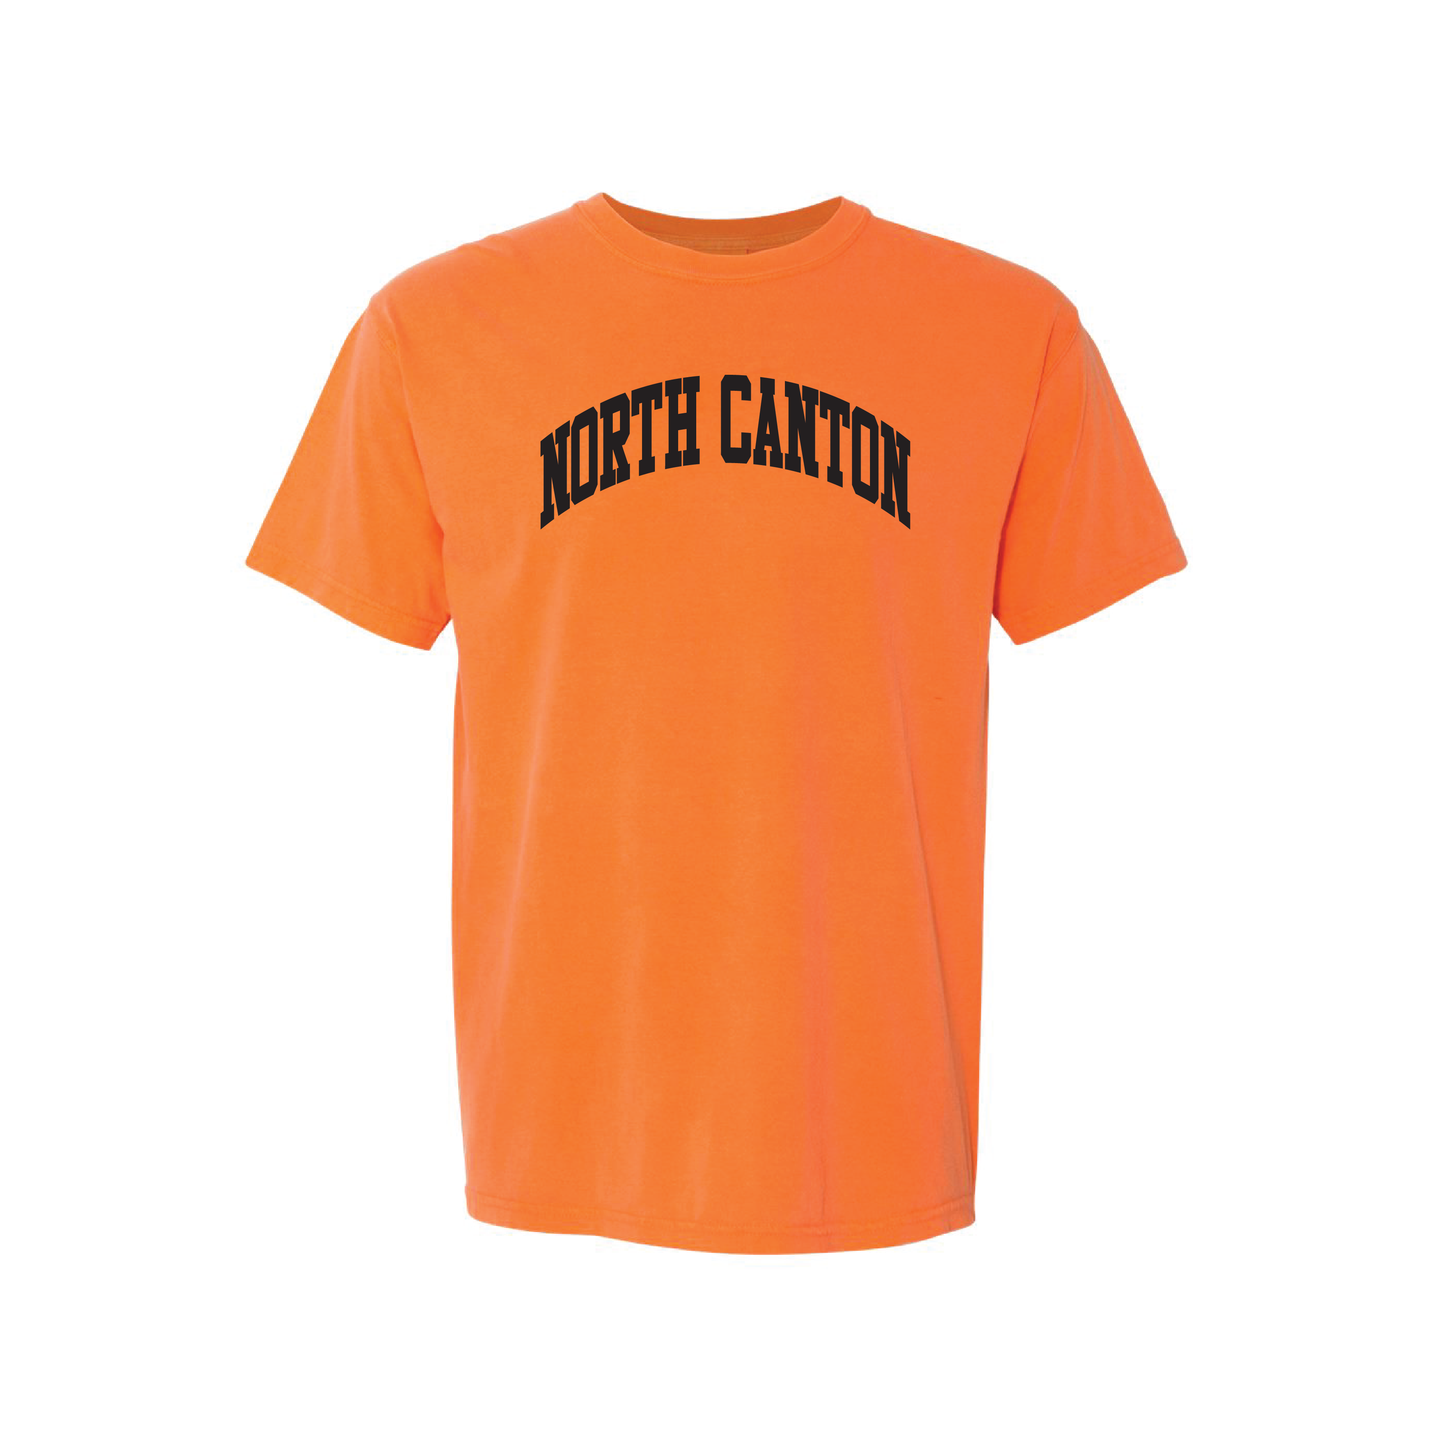 North Canton Vintage T-shirt